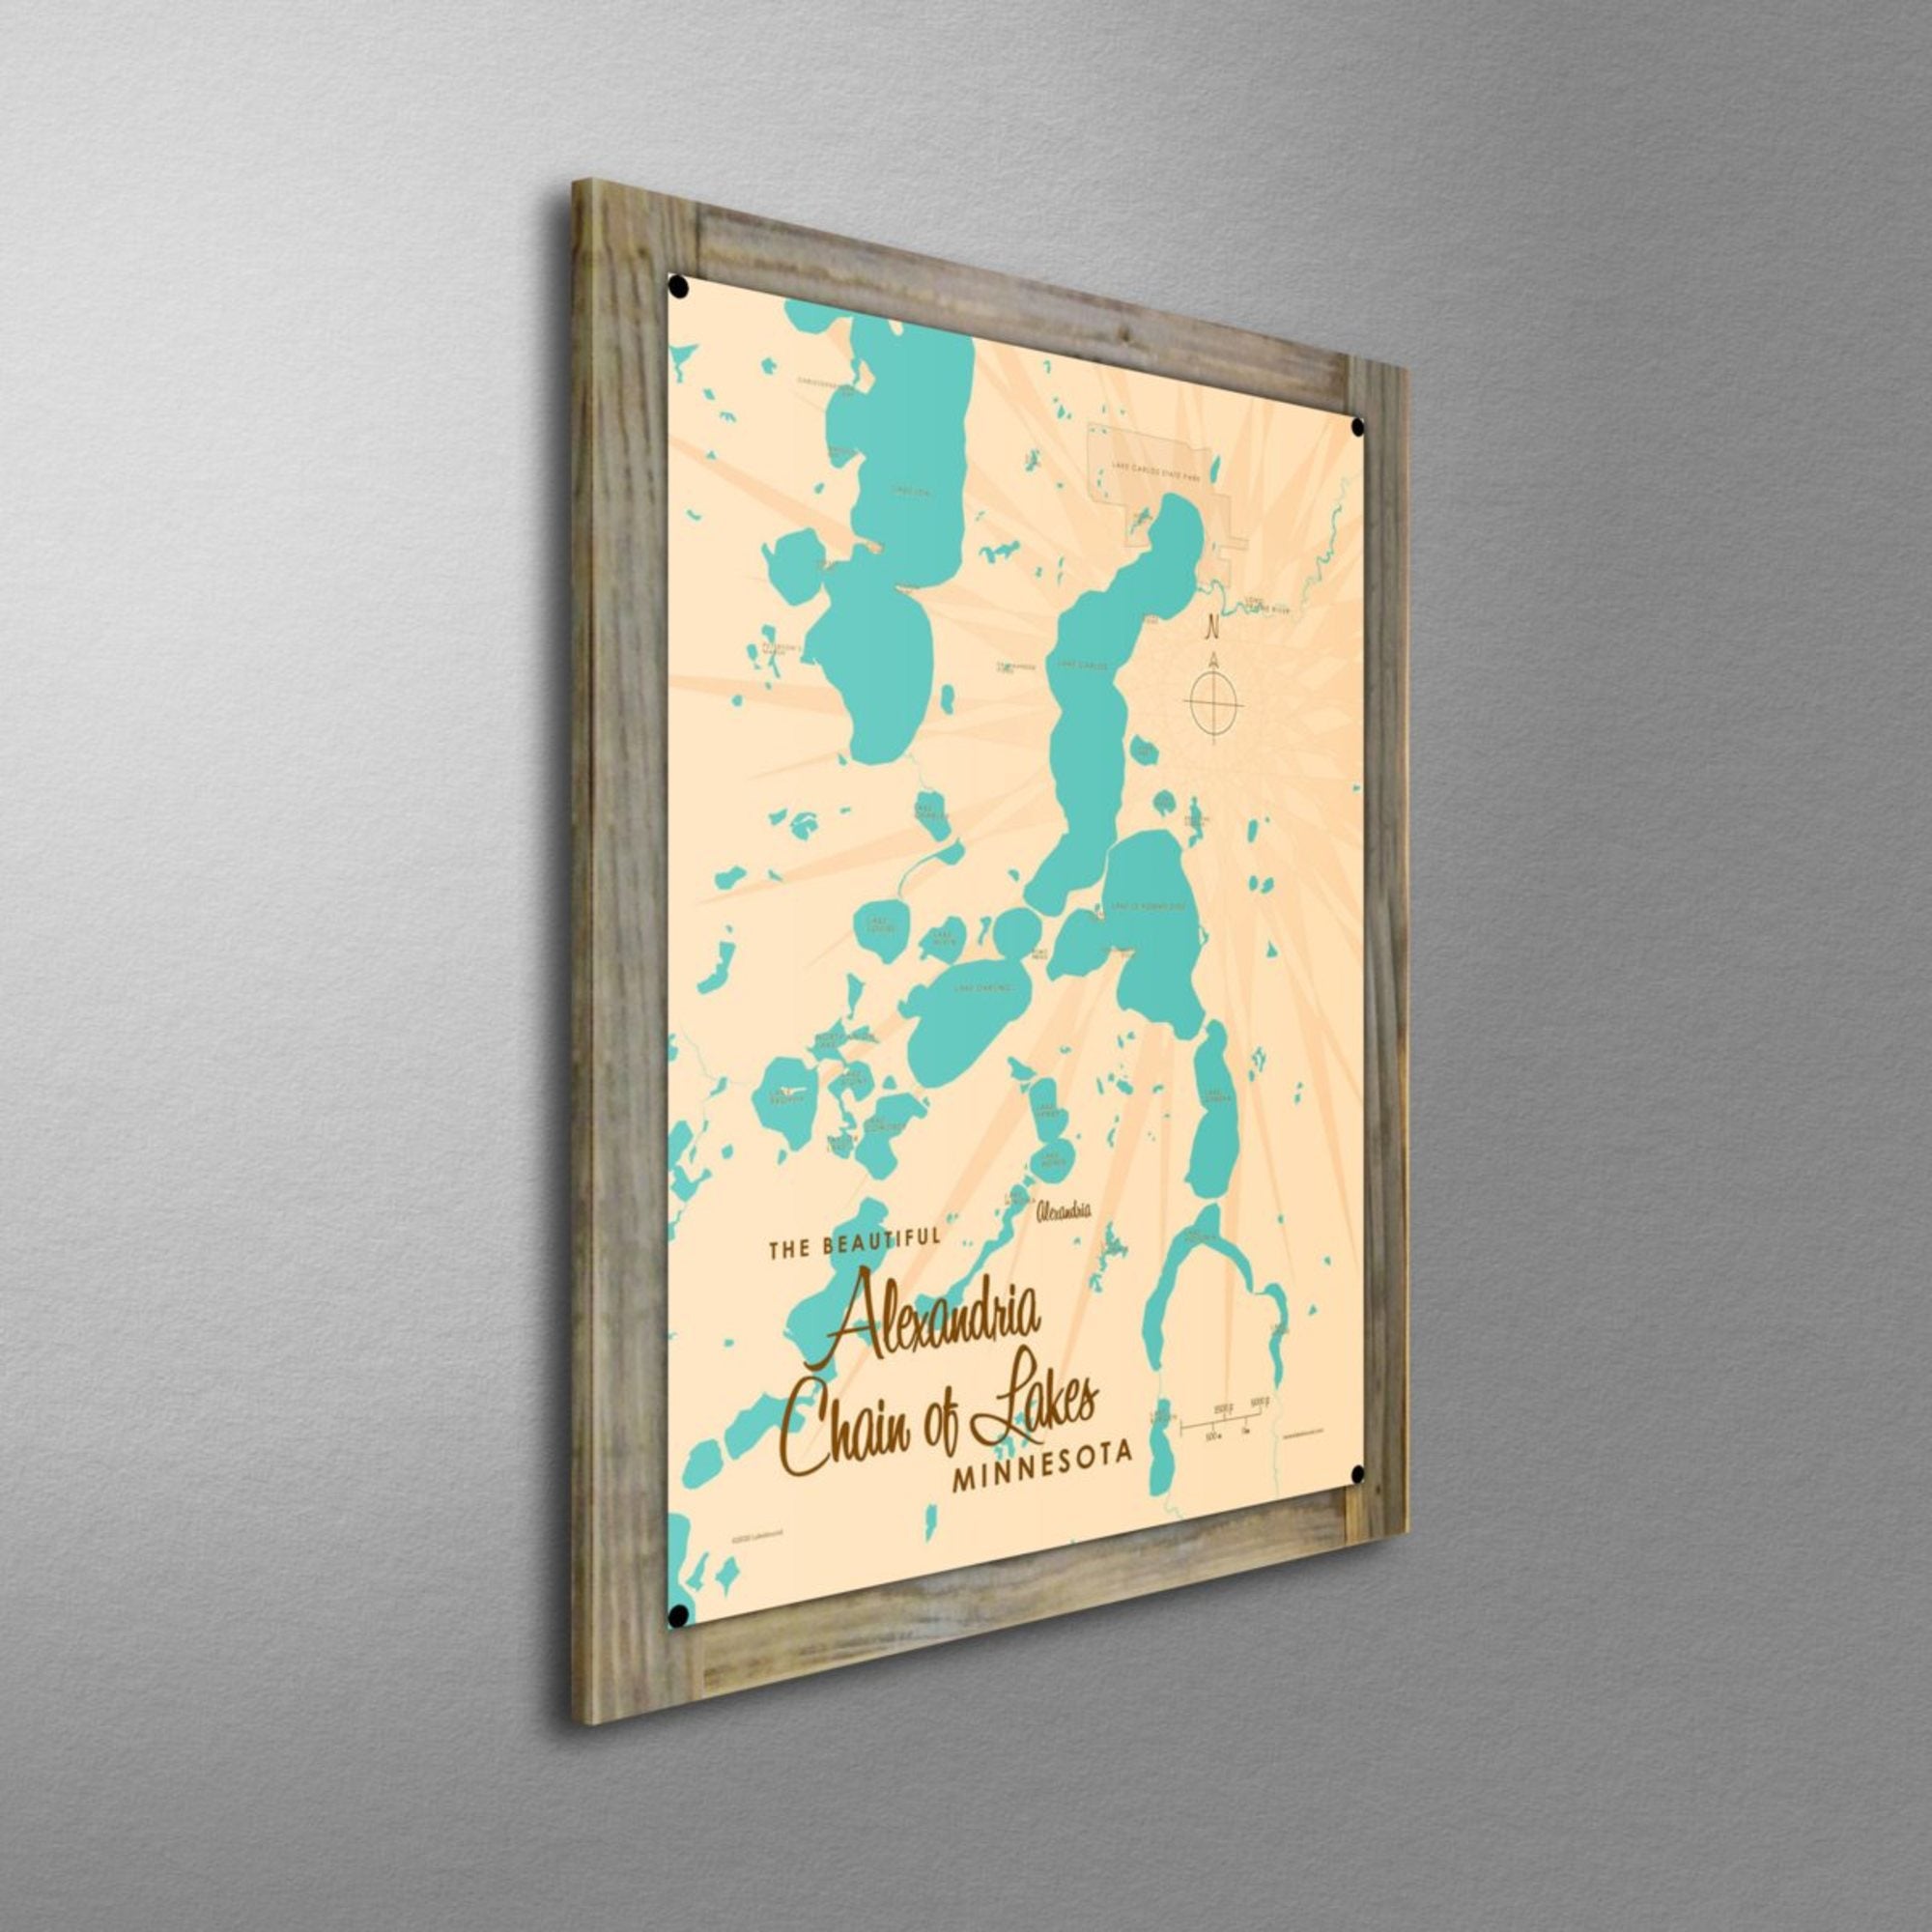 Alexandria Chain of Lakes Minnesota, Wood-Mounted Metal Sign Map Art